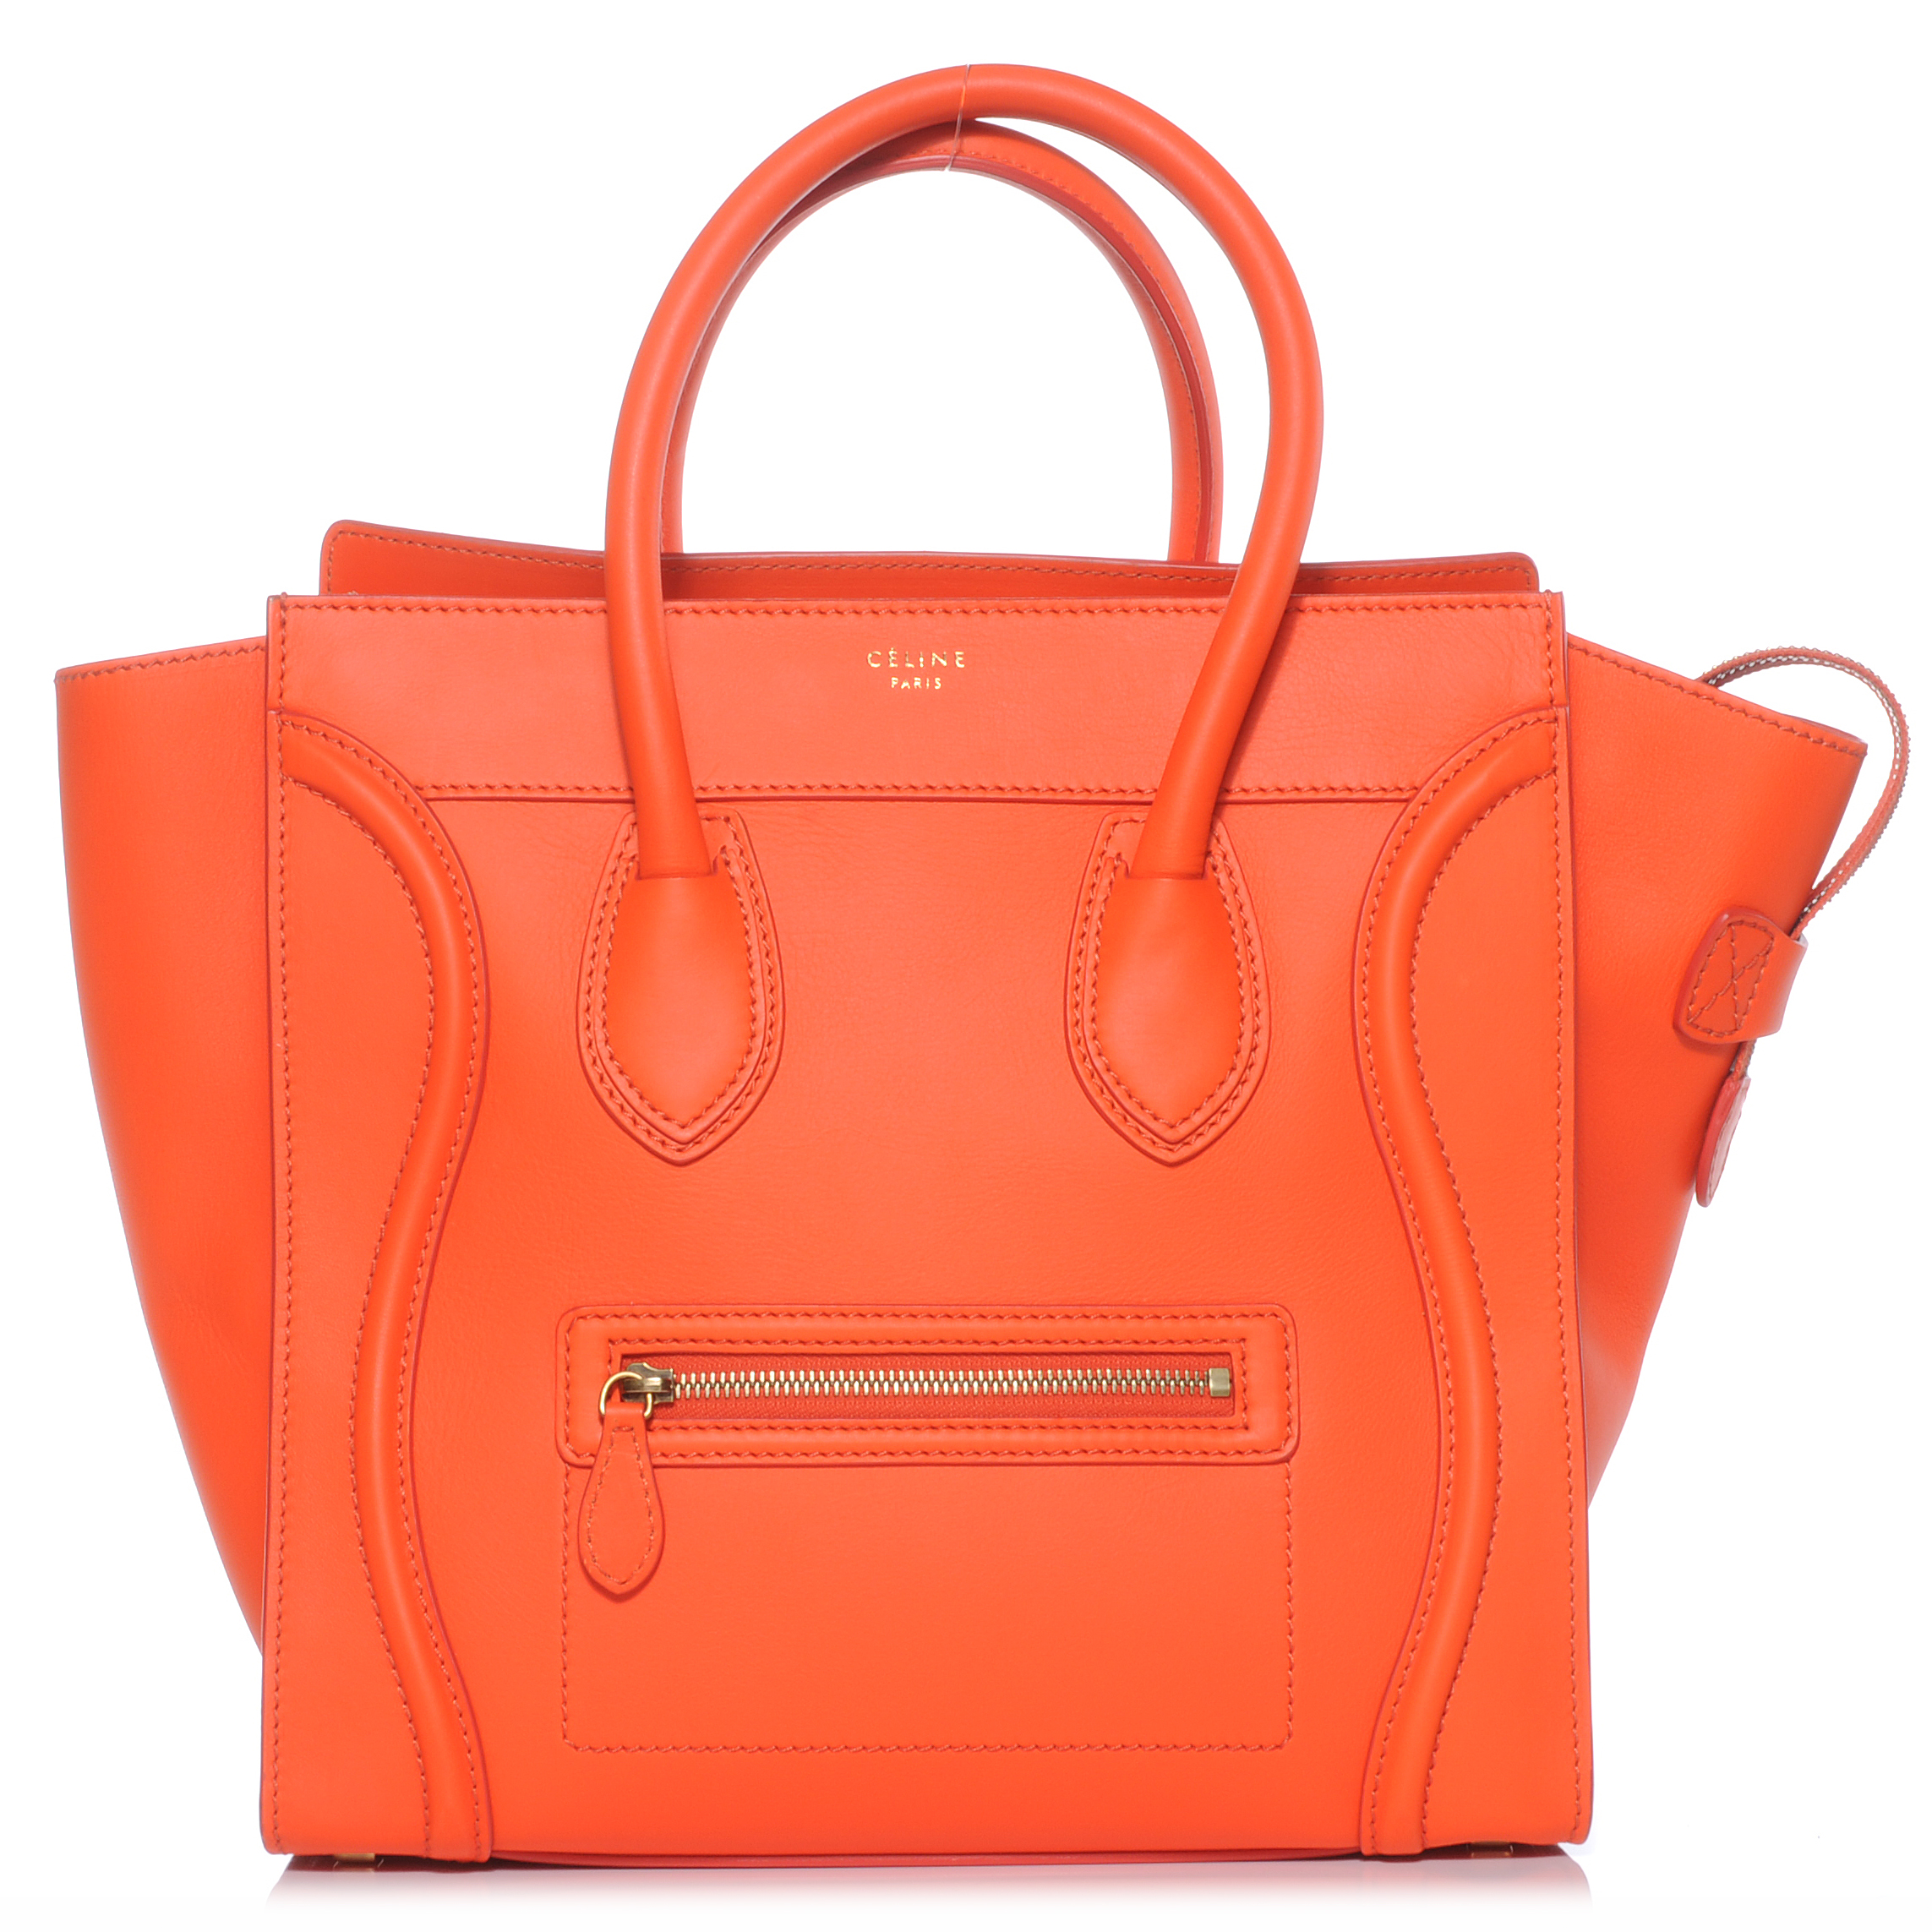 CELINE Smooth Leather Mini Luggage Bright Orange 43047